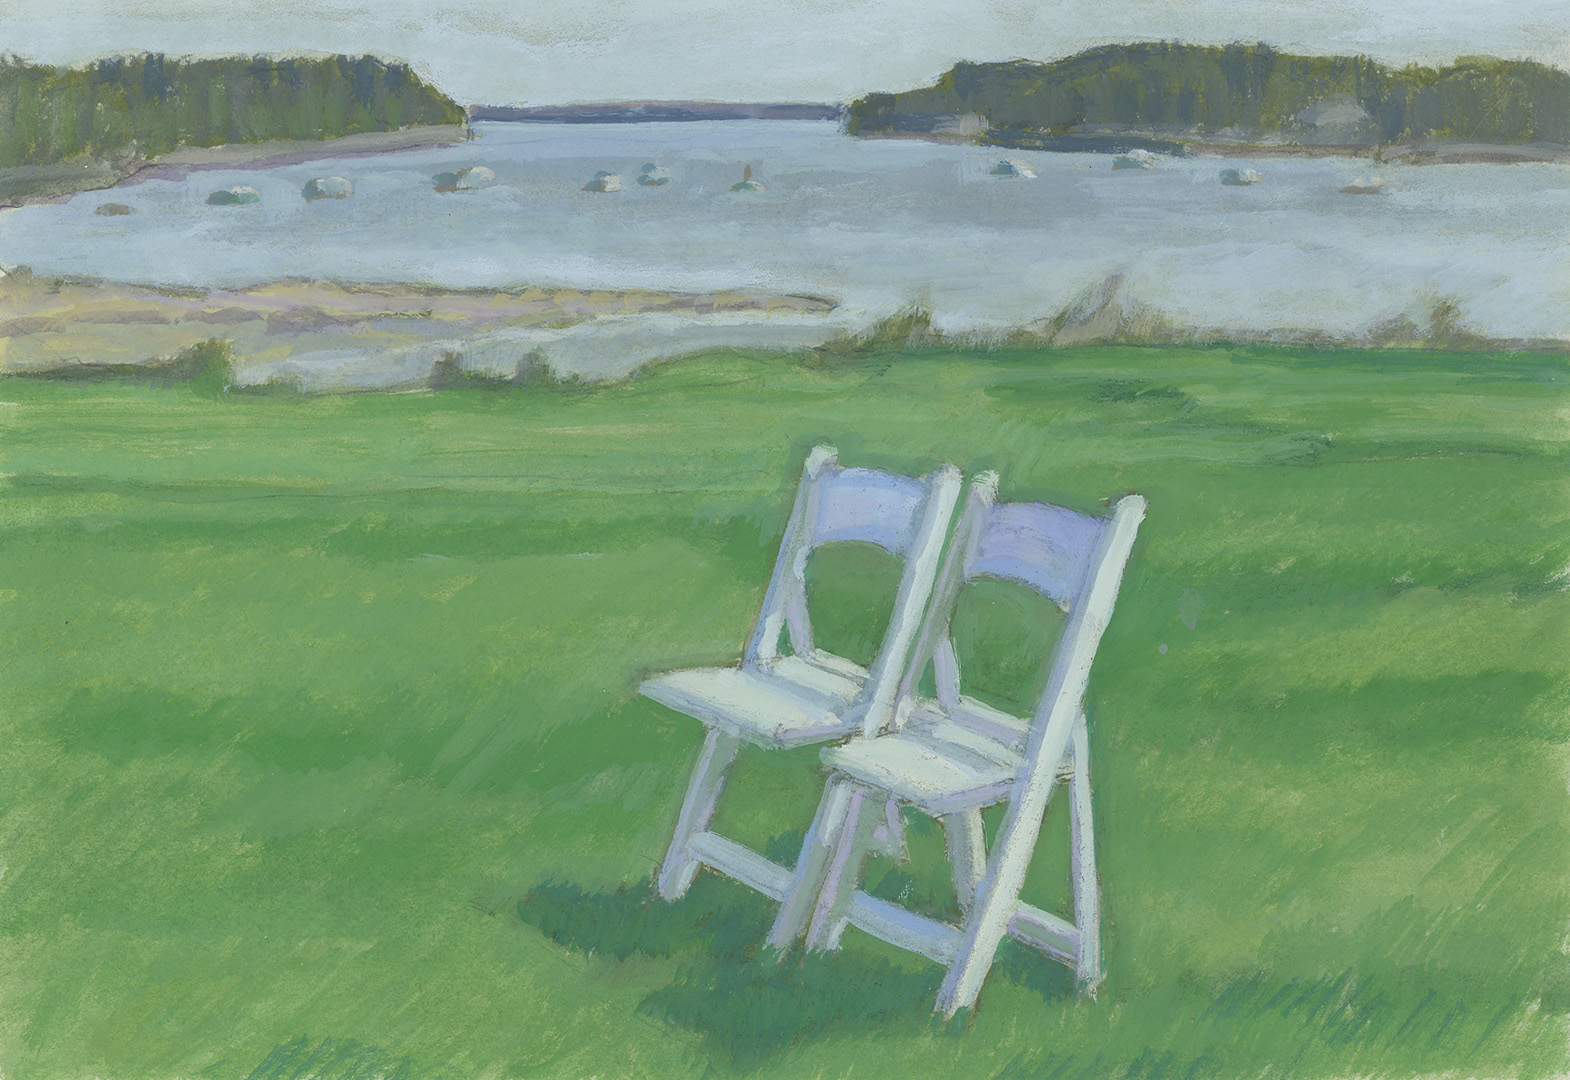  Bride and groom’s chairs. Northeast Harbor, Acadia, ME. June 2019 